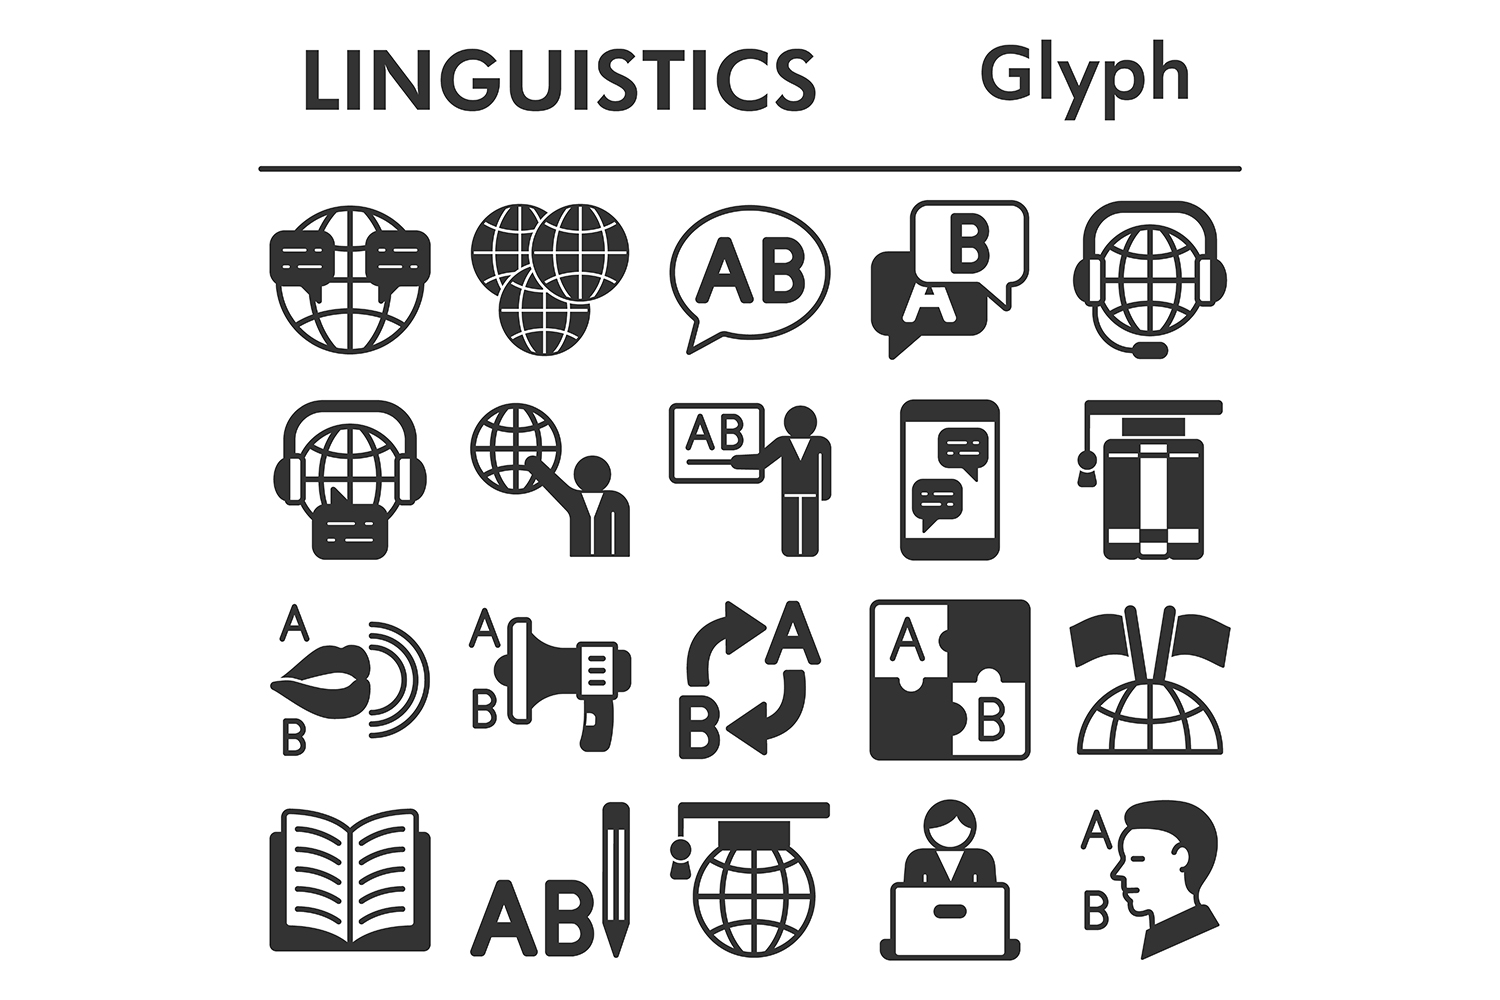 Linguistics icons set, glyph style pinterest preview image.